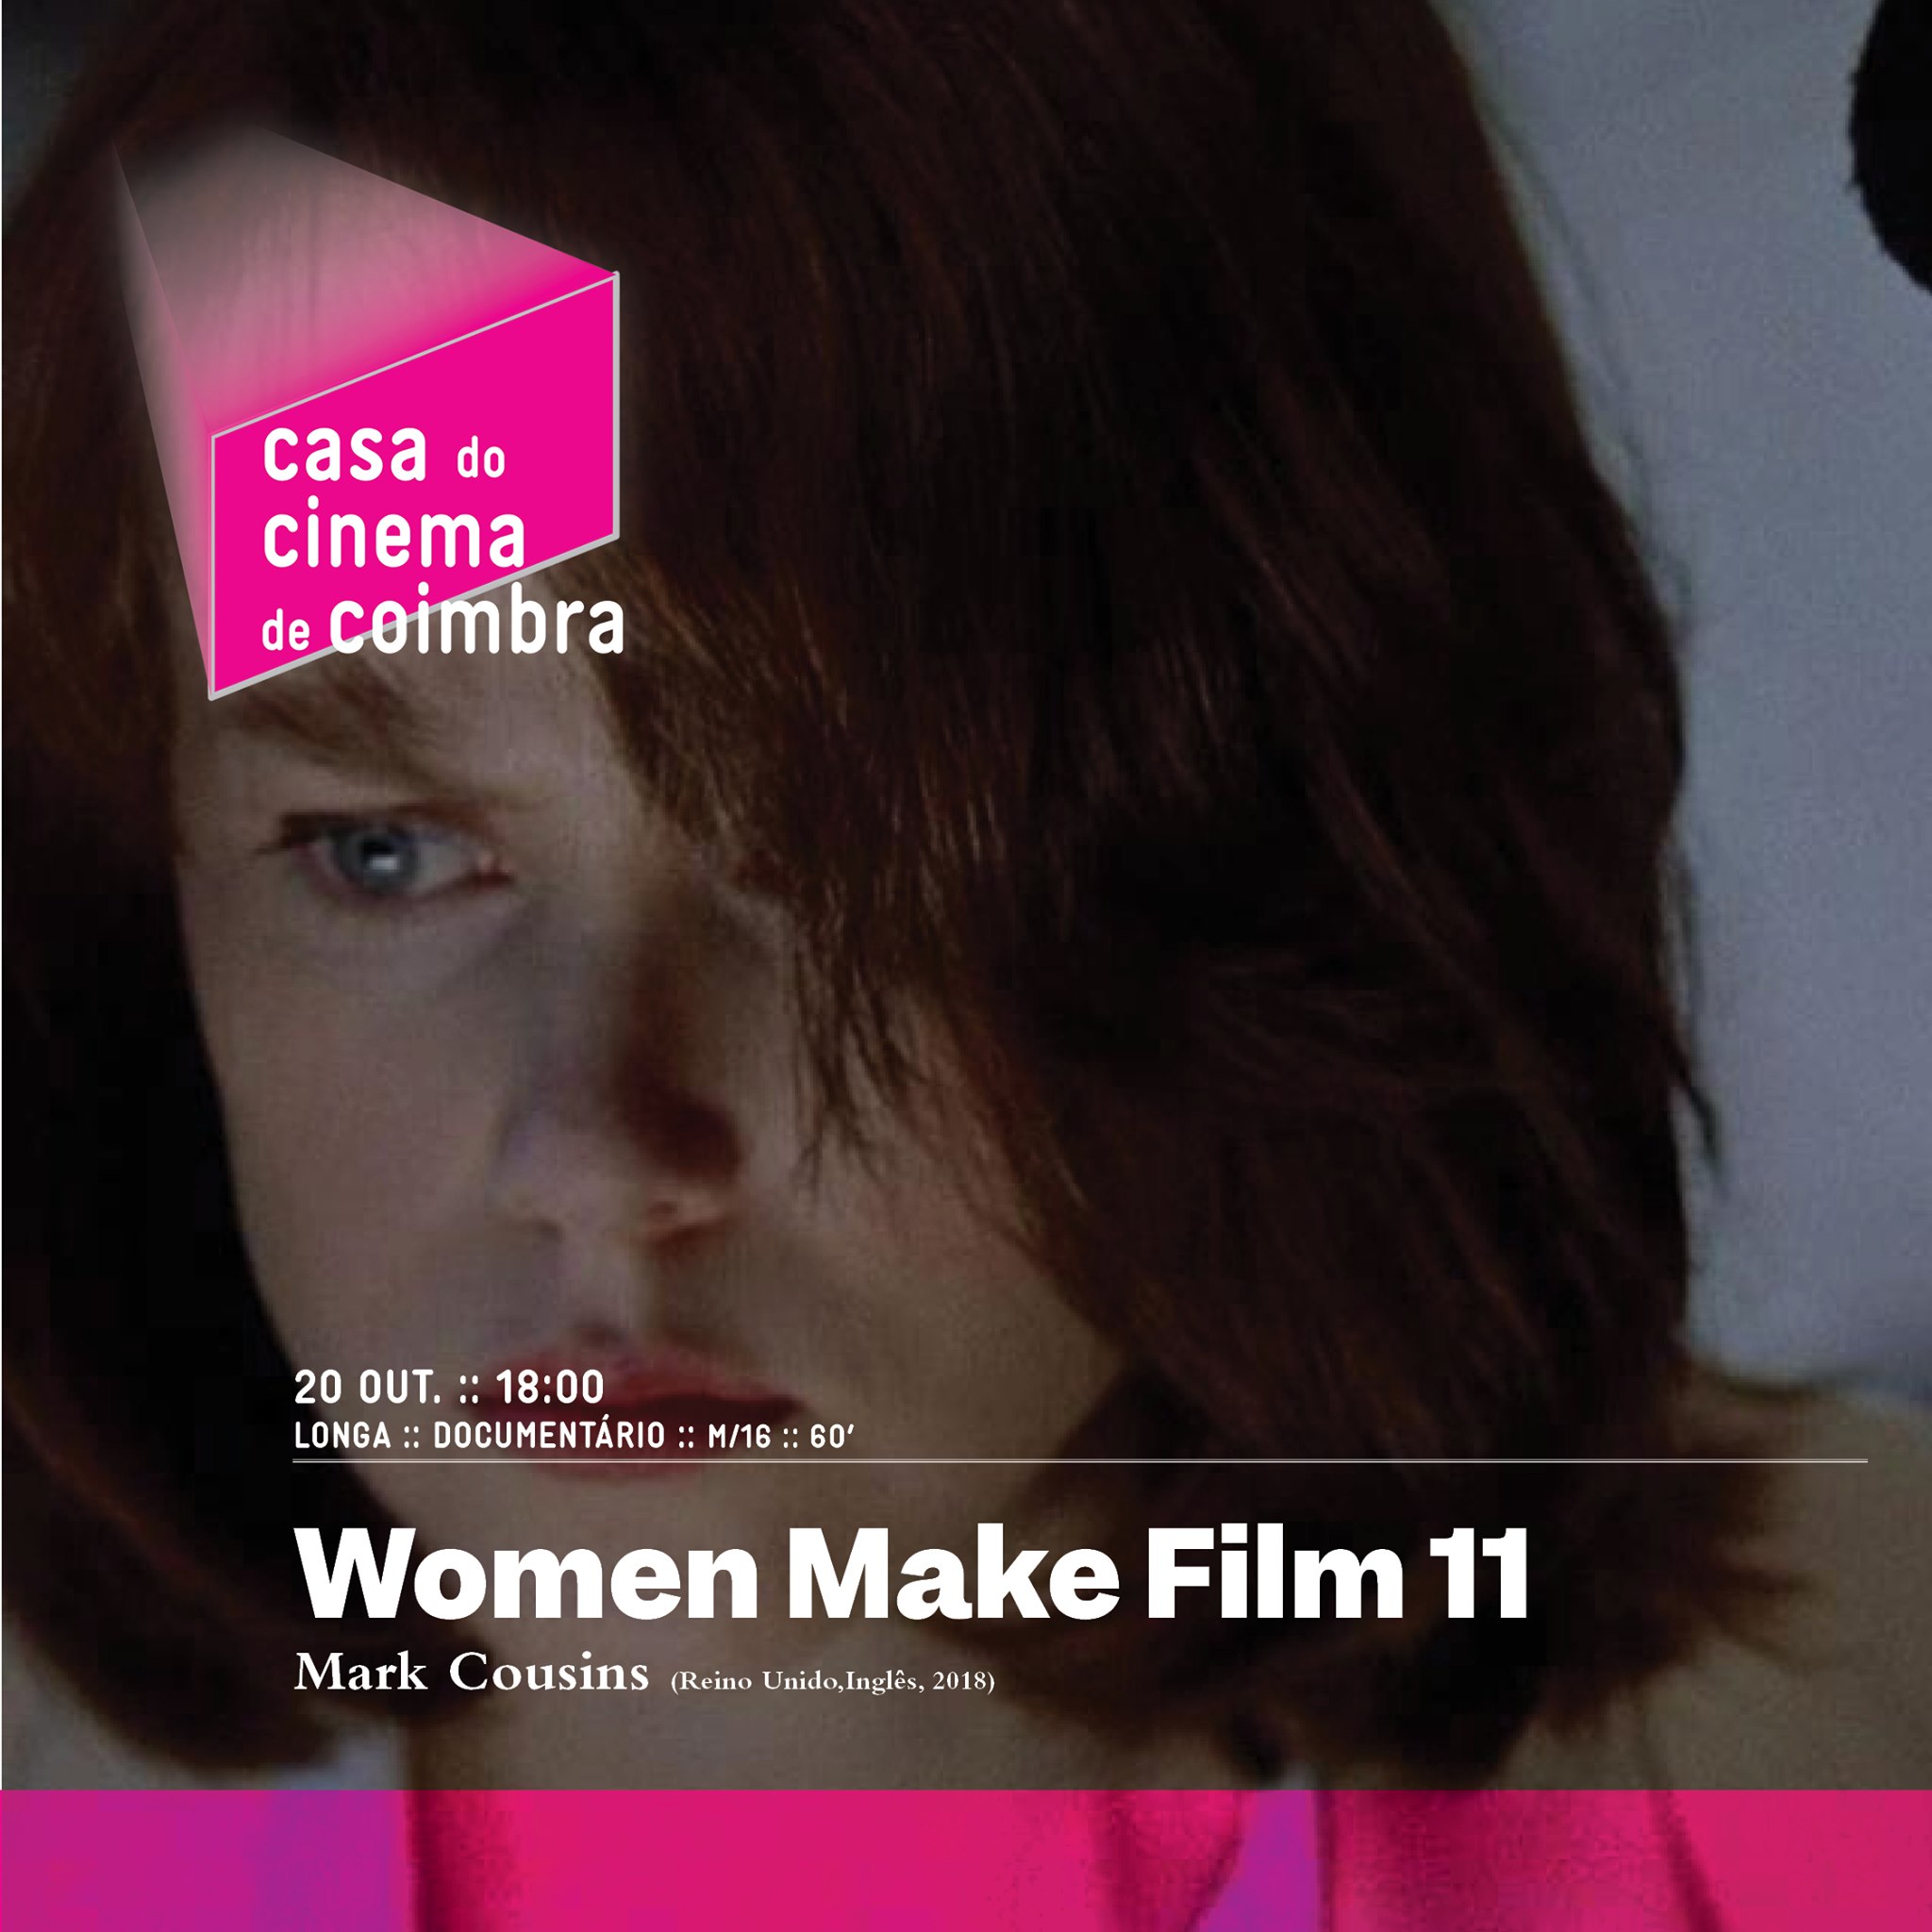 WOMEN MAKE FILM 11